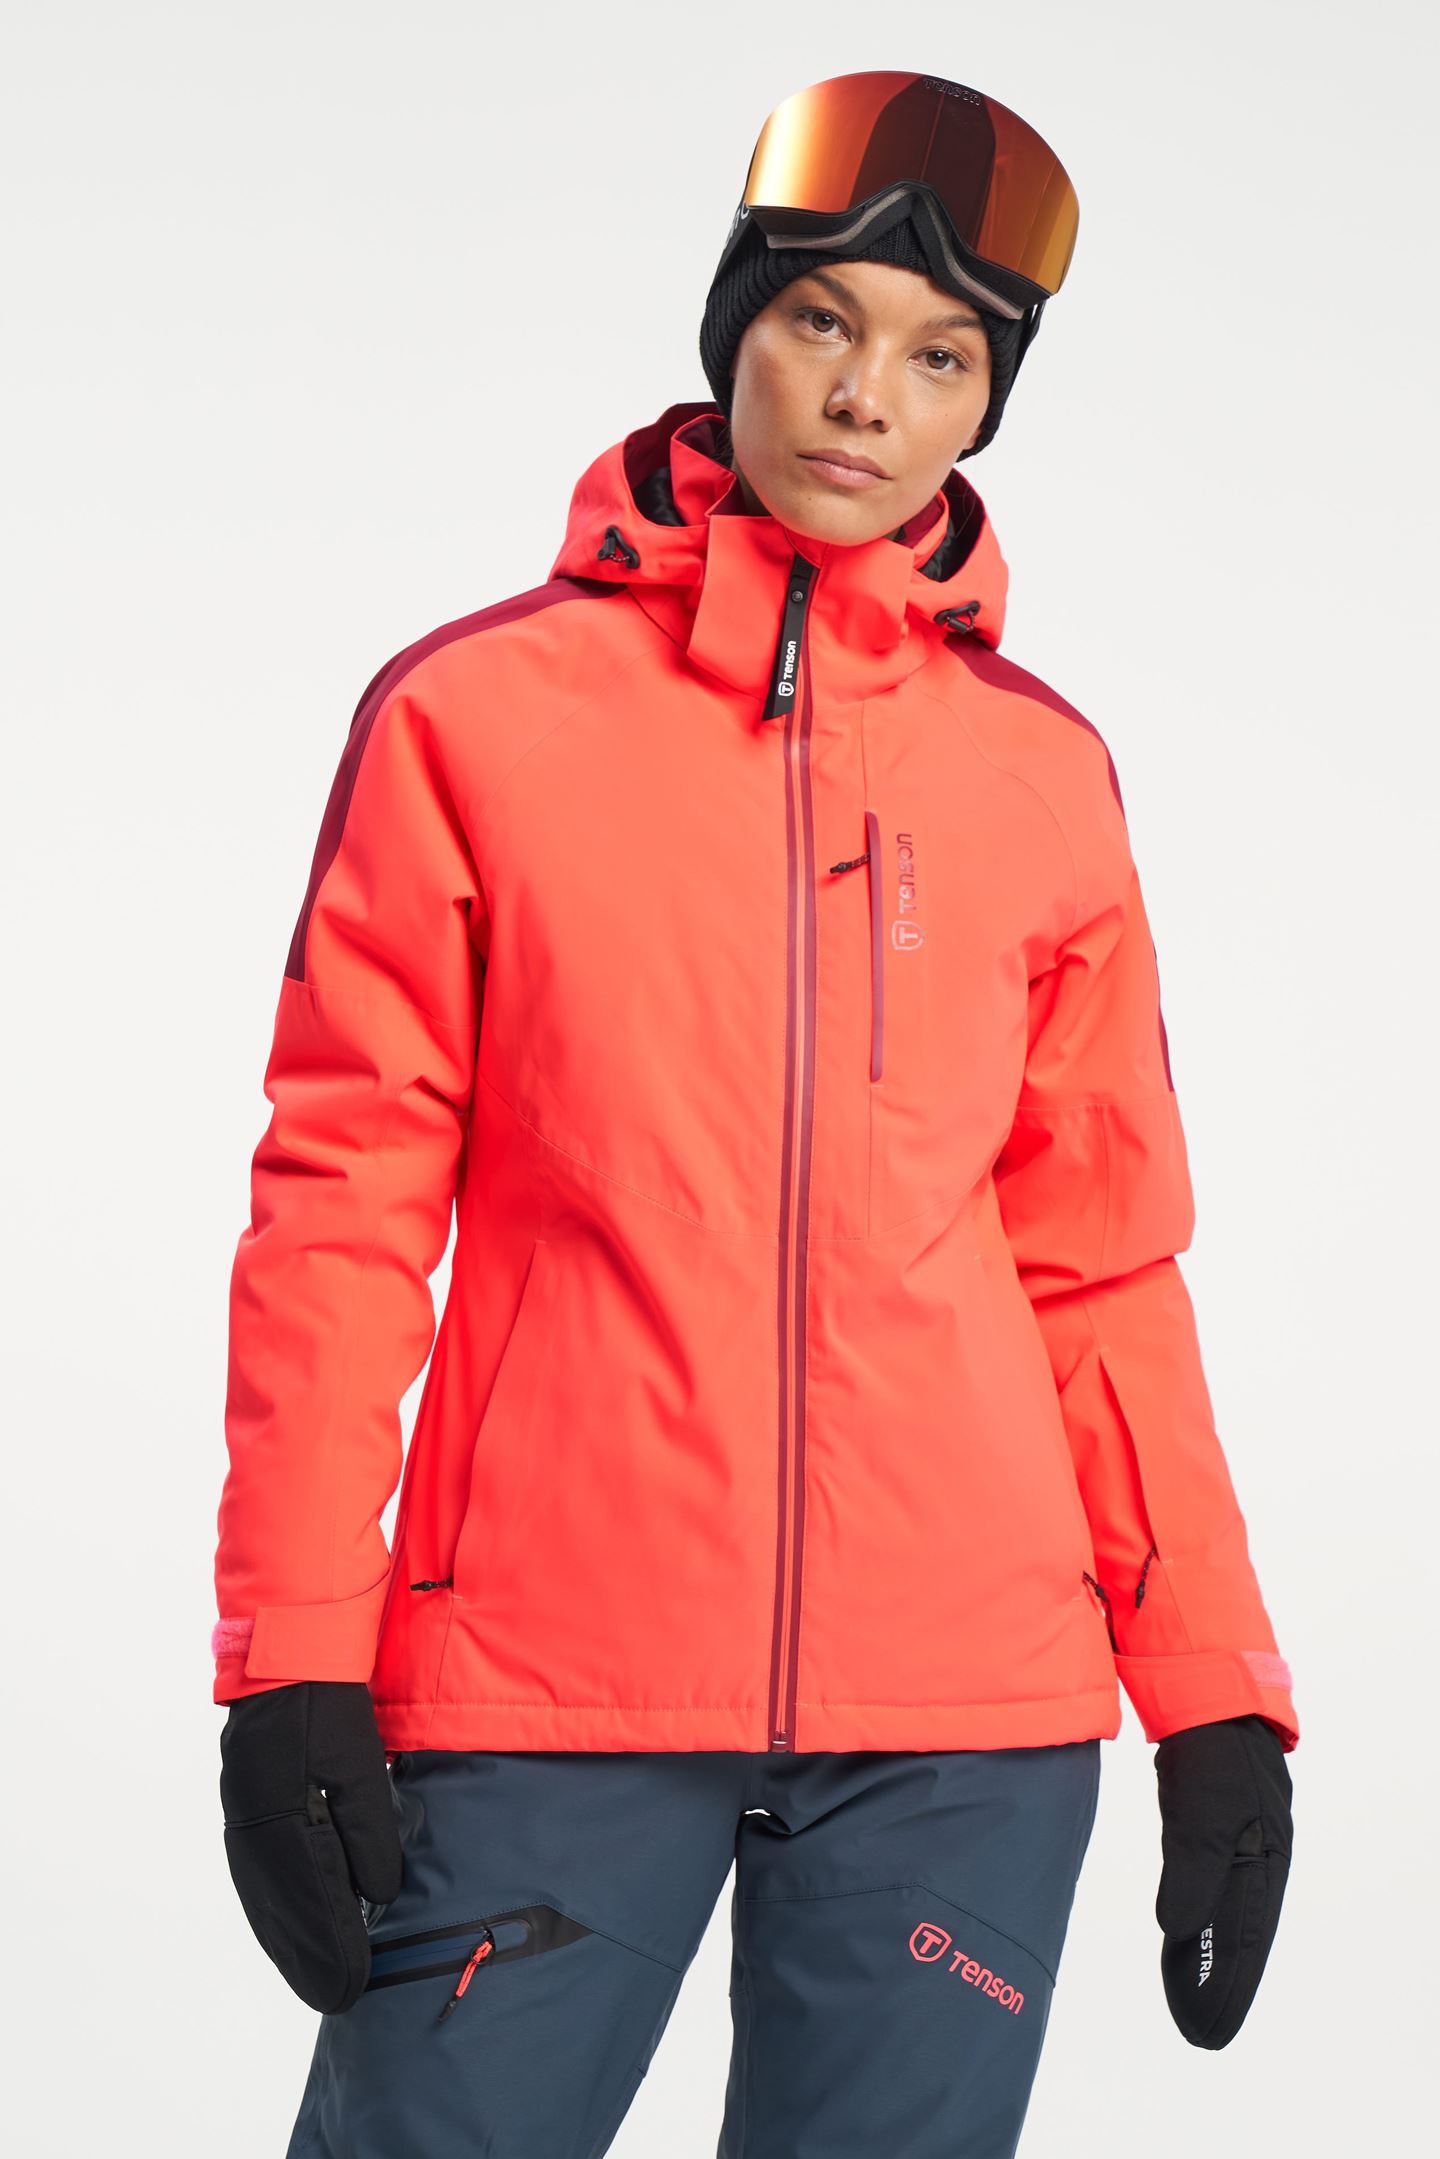 Reserveren gevoeligheid naald Core Ski Jacket - Classic Ski Jacket - Coral